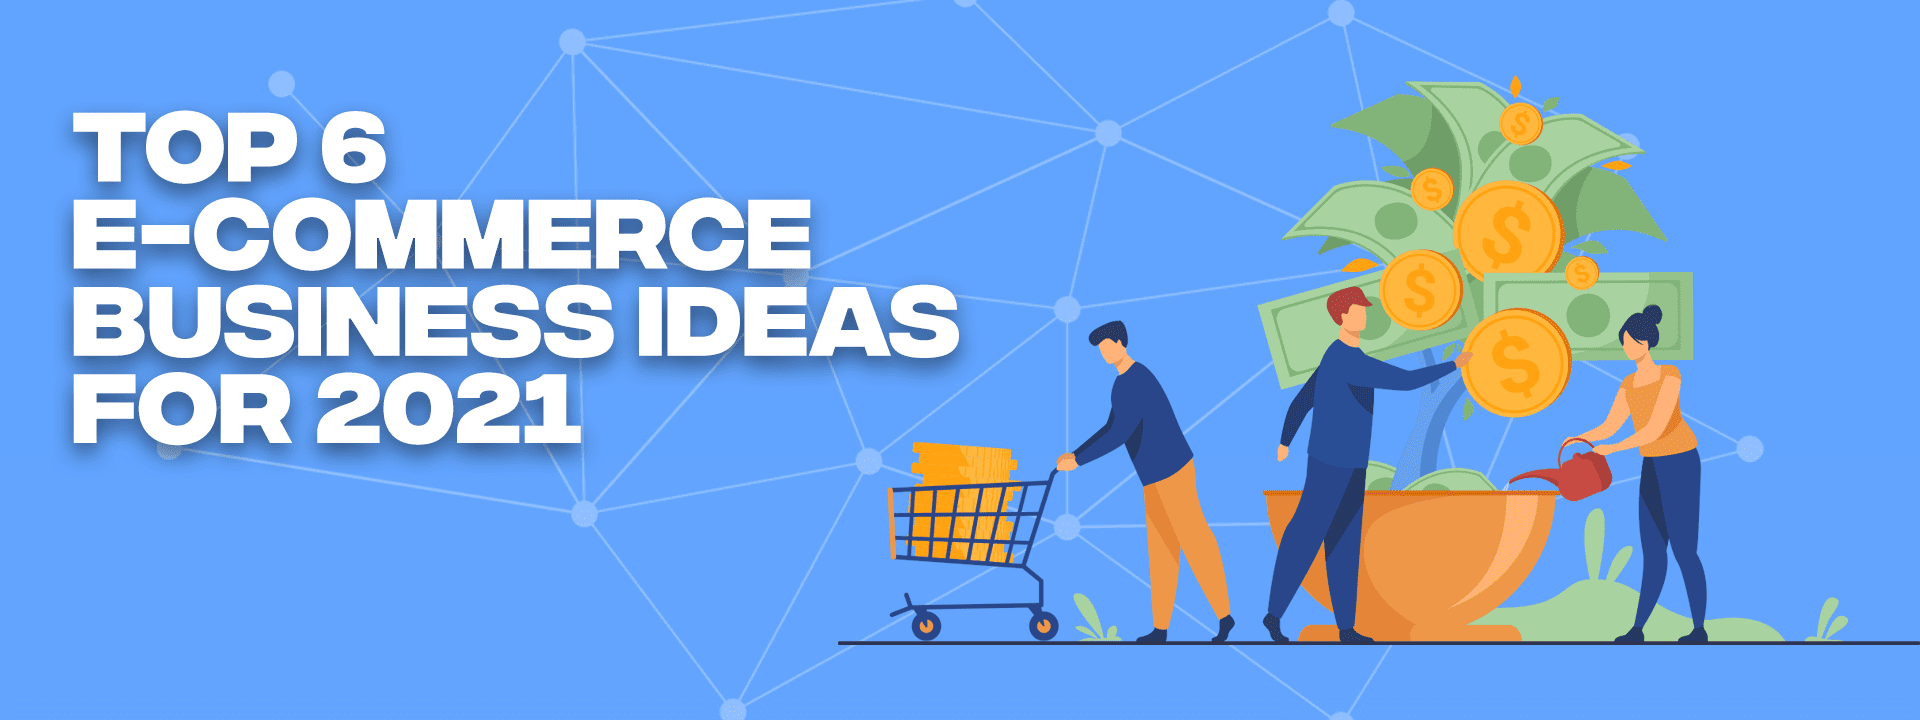 E-commerce Business Ideas for 2021